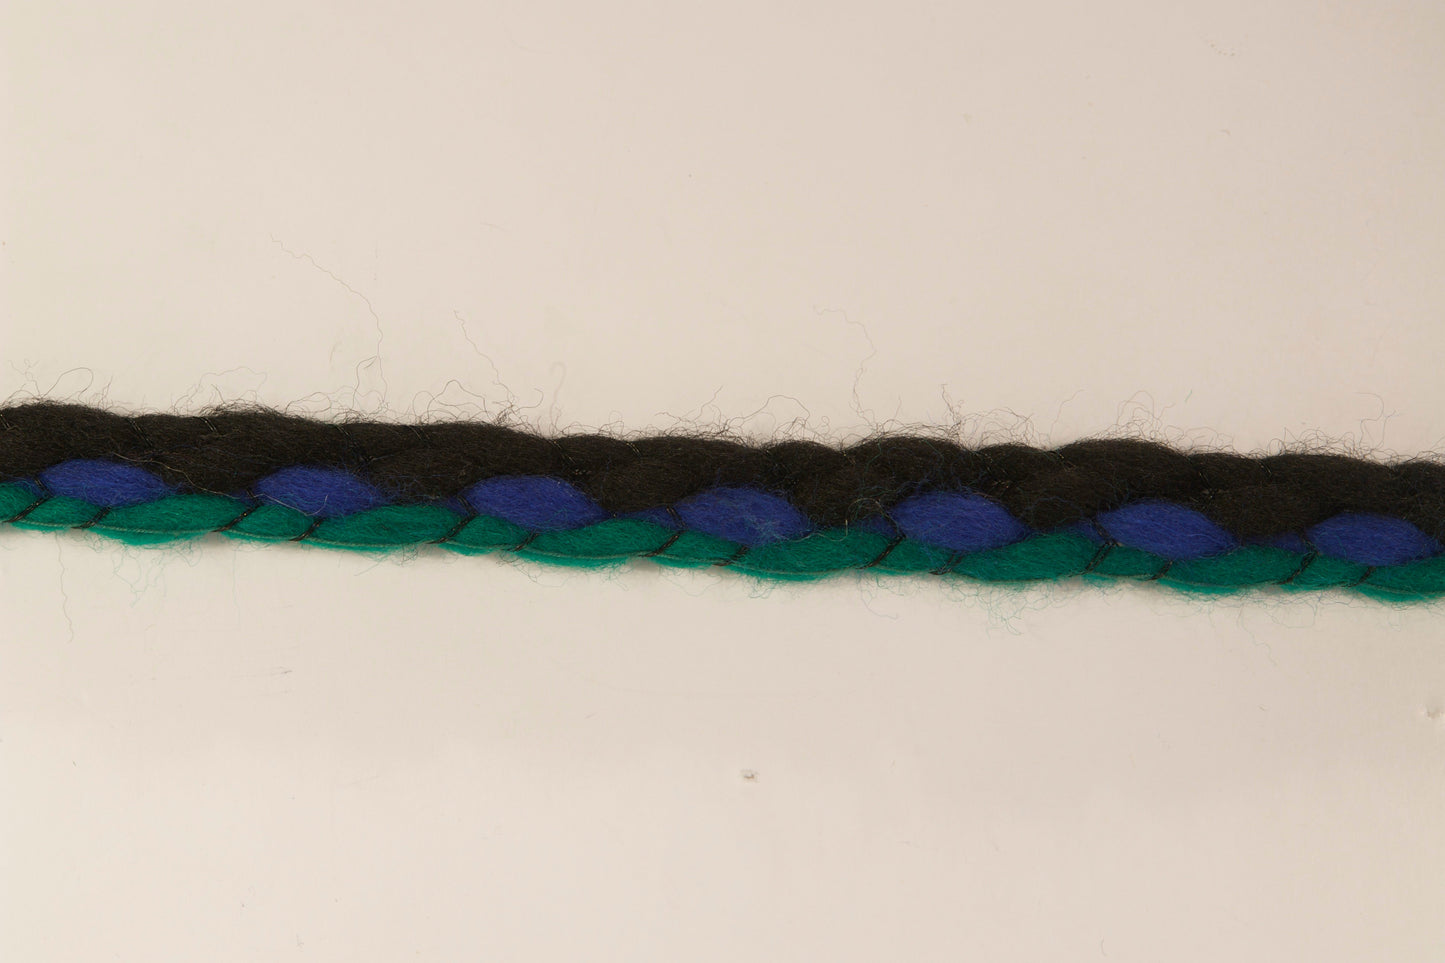 Yarn band 12 mm